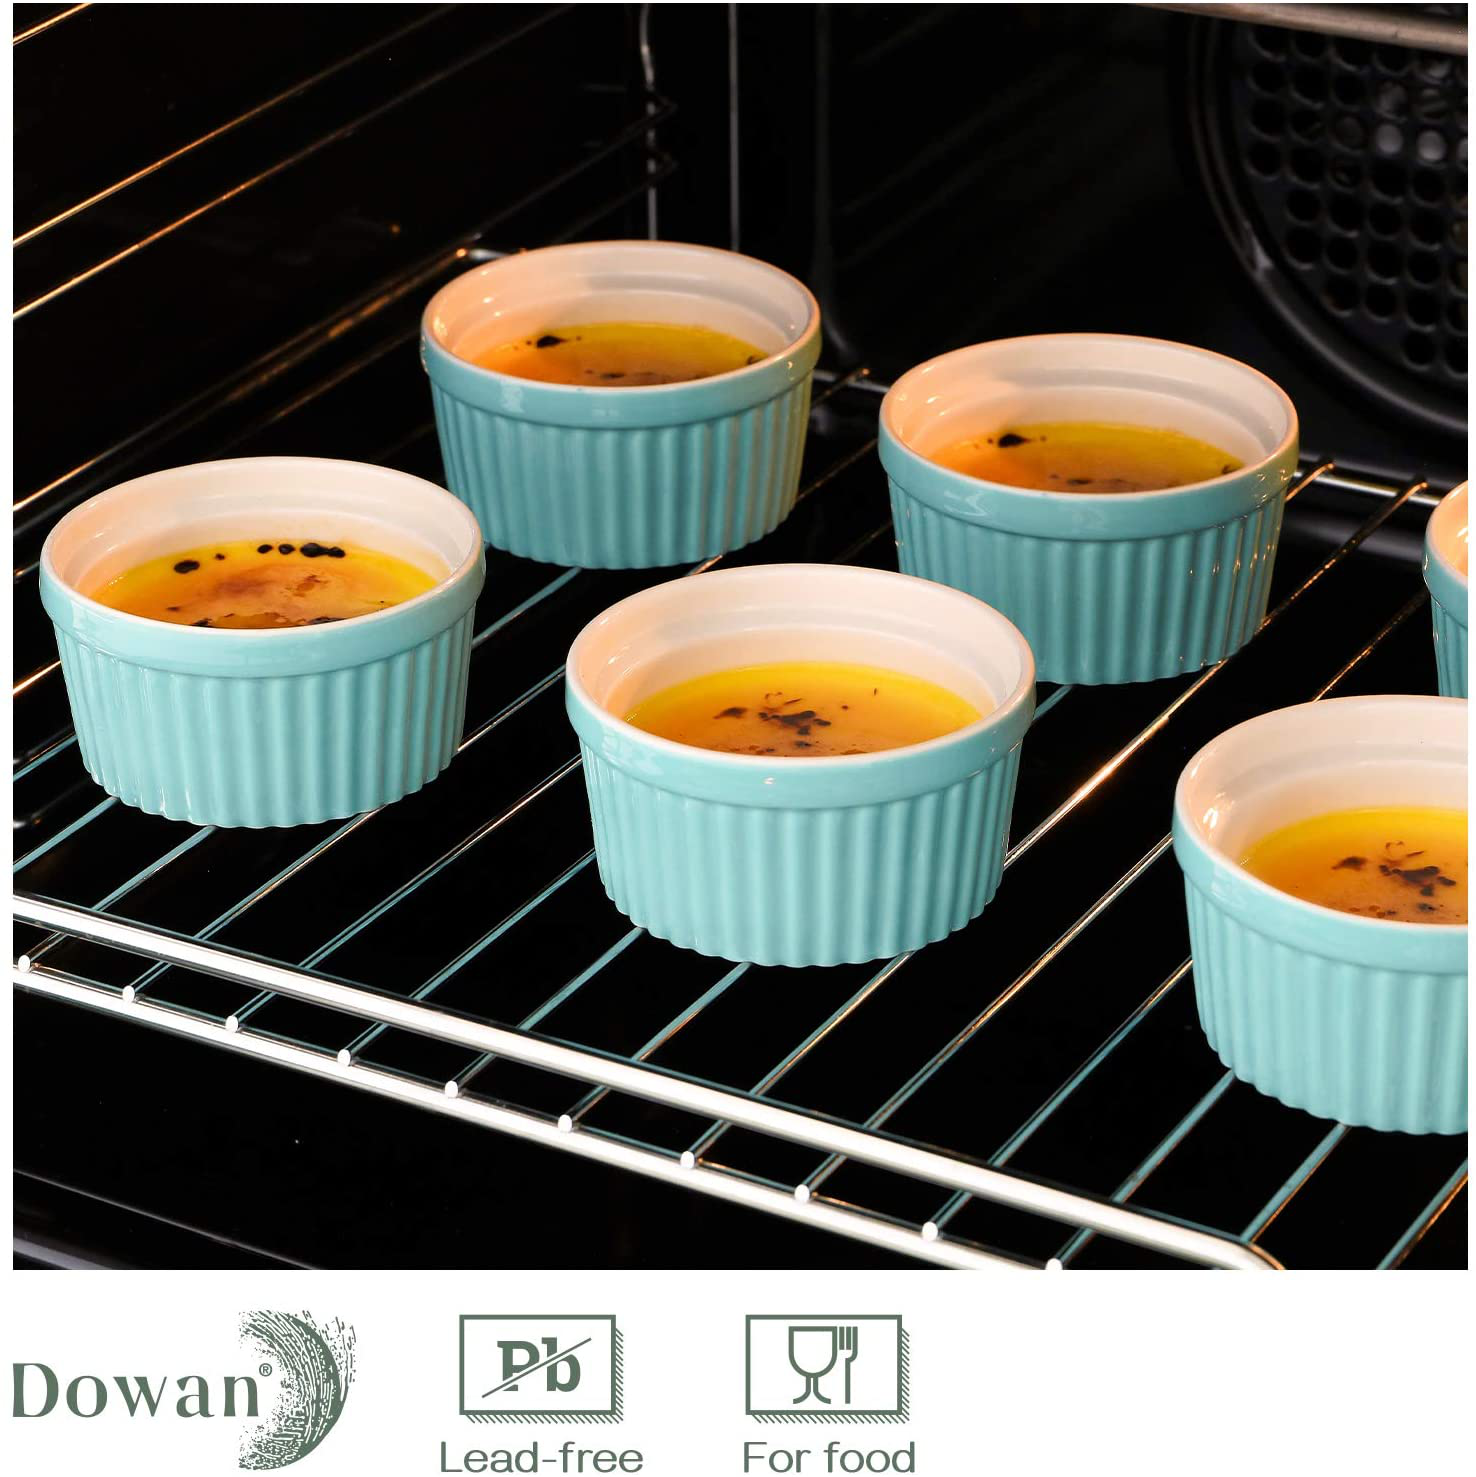 DOWAN 10 oz Ramekins - Ramekins 10 oz oven safe for Creme Brulee Souffle, Porcelain Ramekins Oven Safe, Classic Style Ramekins for Baking Ramekins Bowls, Set of 6, Blue